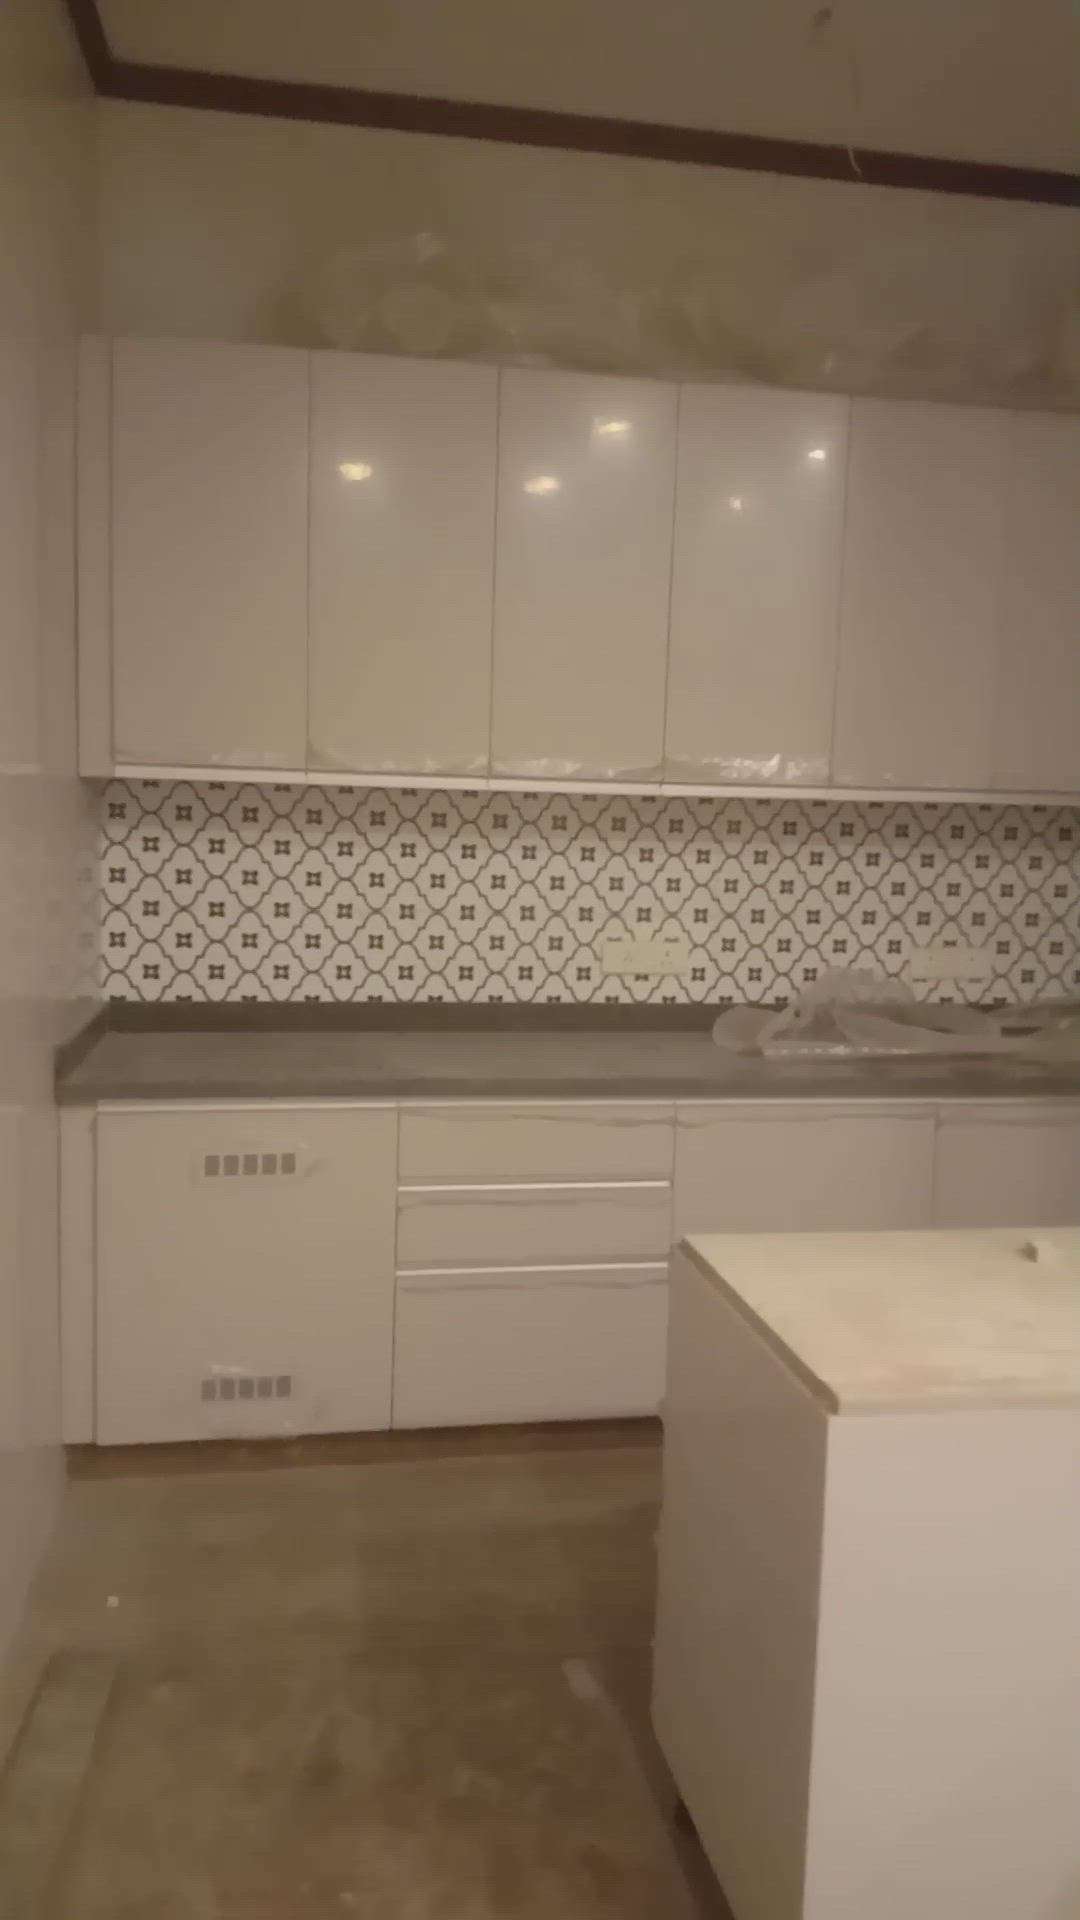 z.s interior moduler kitchens
cont 9058393454